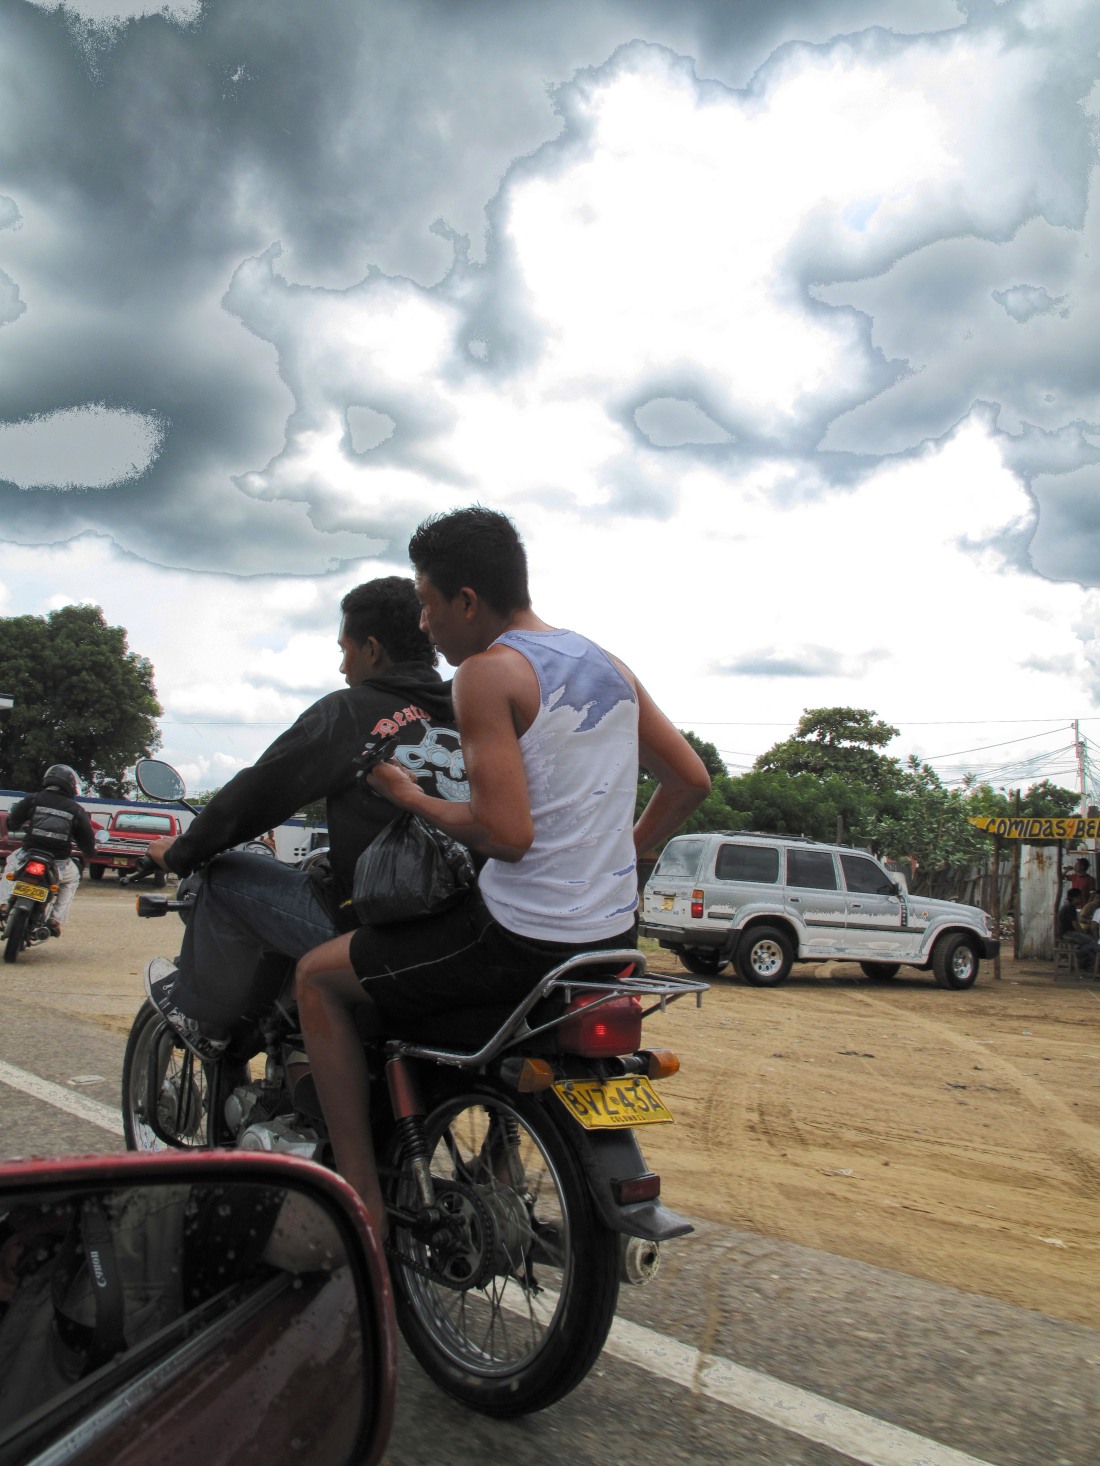 Dos en moto en Maicao - Guajira - Colombia - Foto Gino Lofredo (2009)